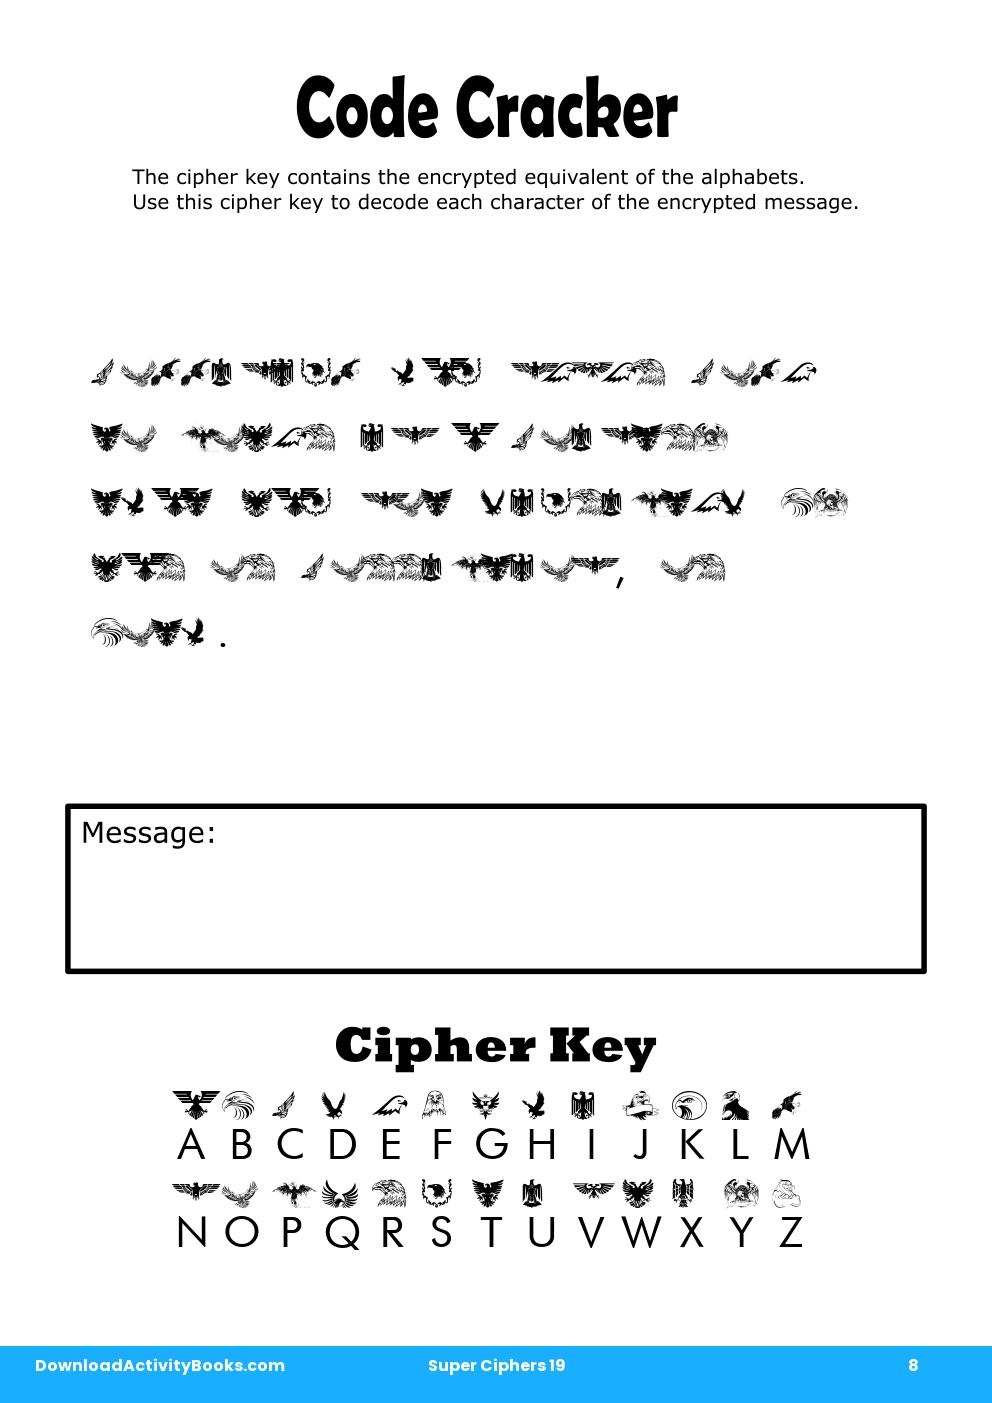 Code Cracker in Super Ciphers 19